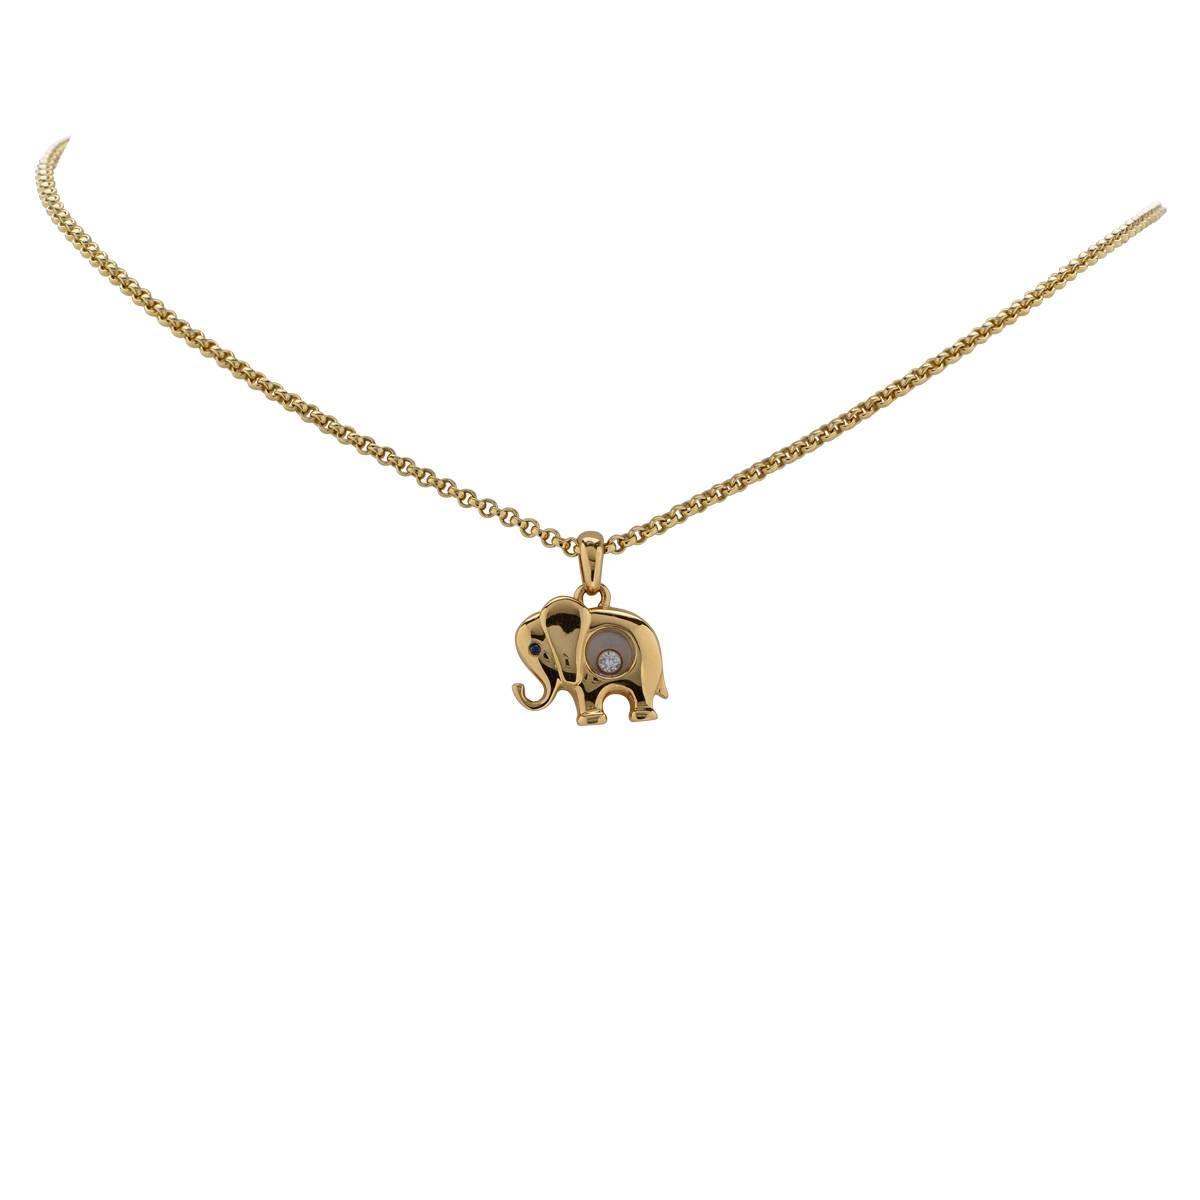 Chopard Diamond Necklace at 1stdibs